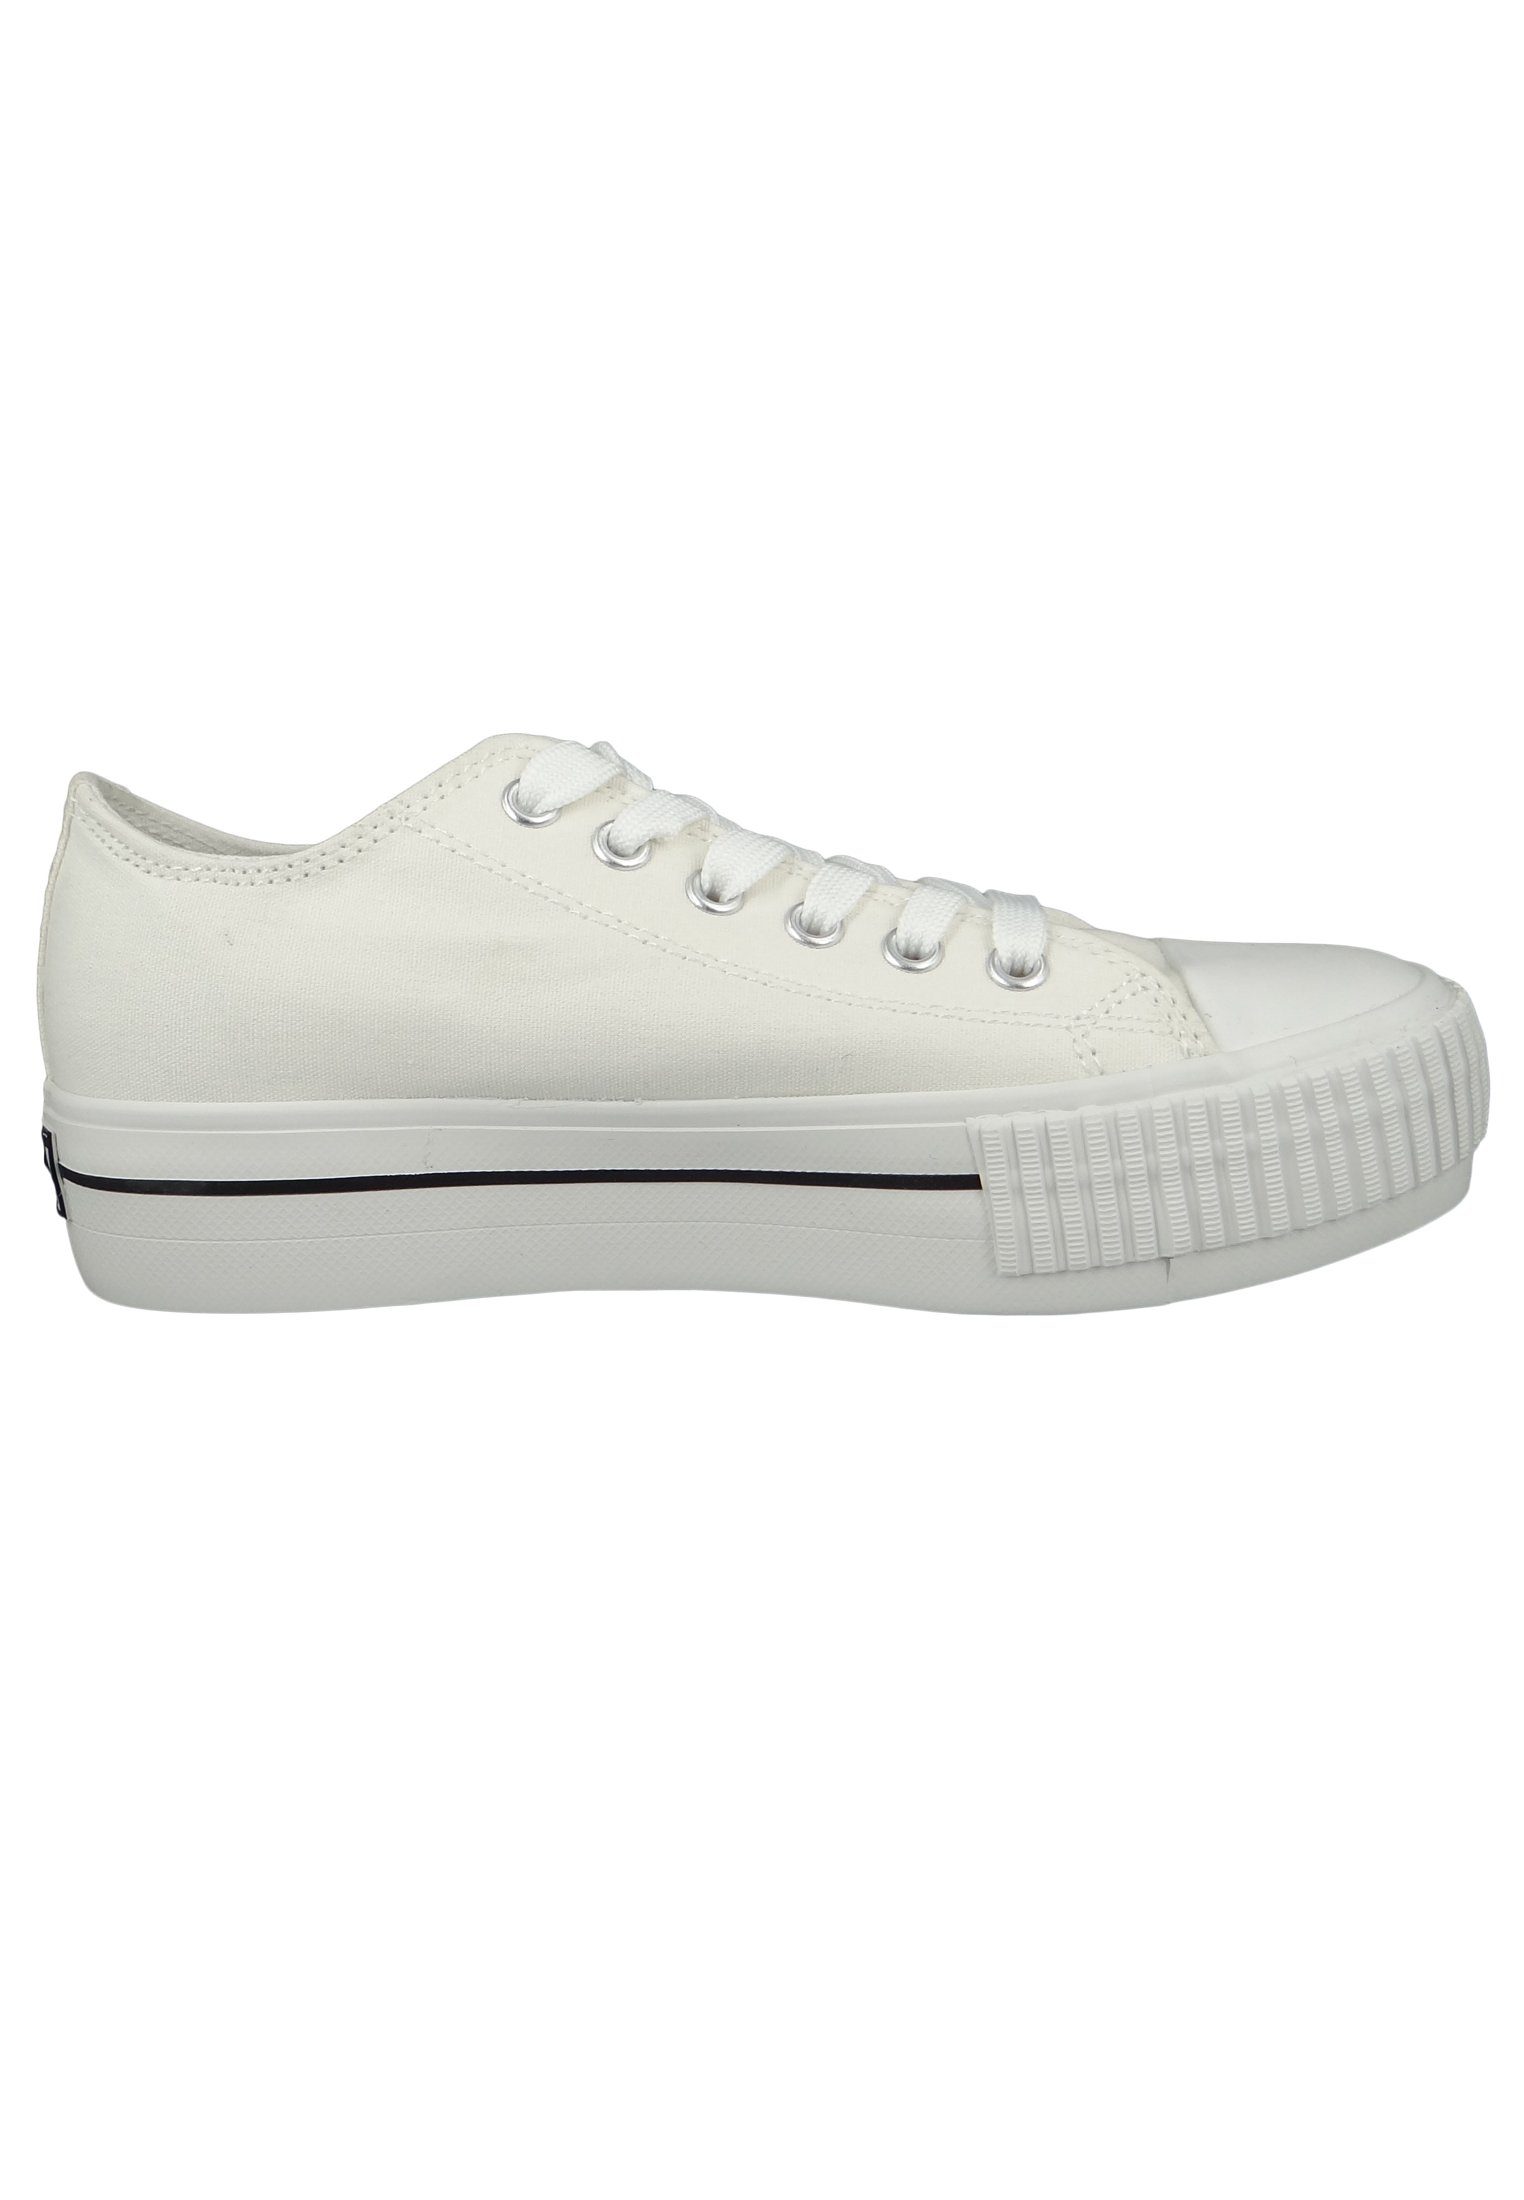 Knights Platform Sneaker White British Master B43-3726-01